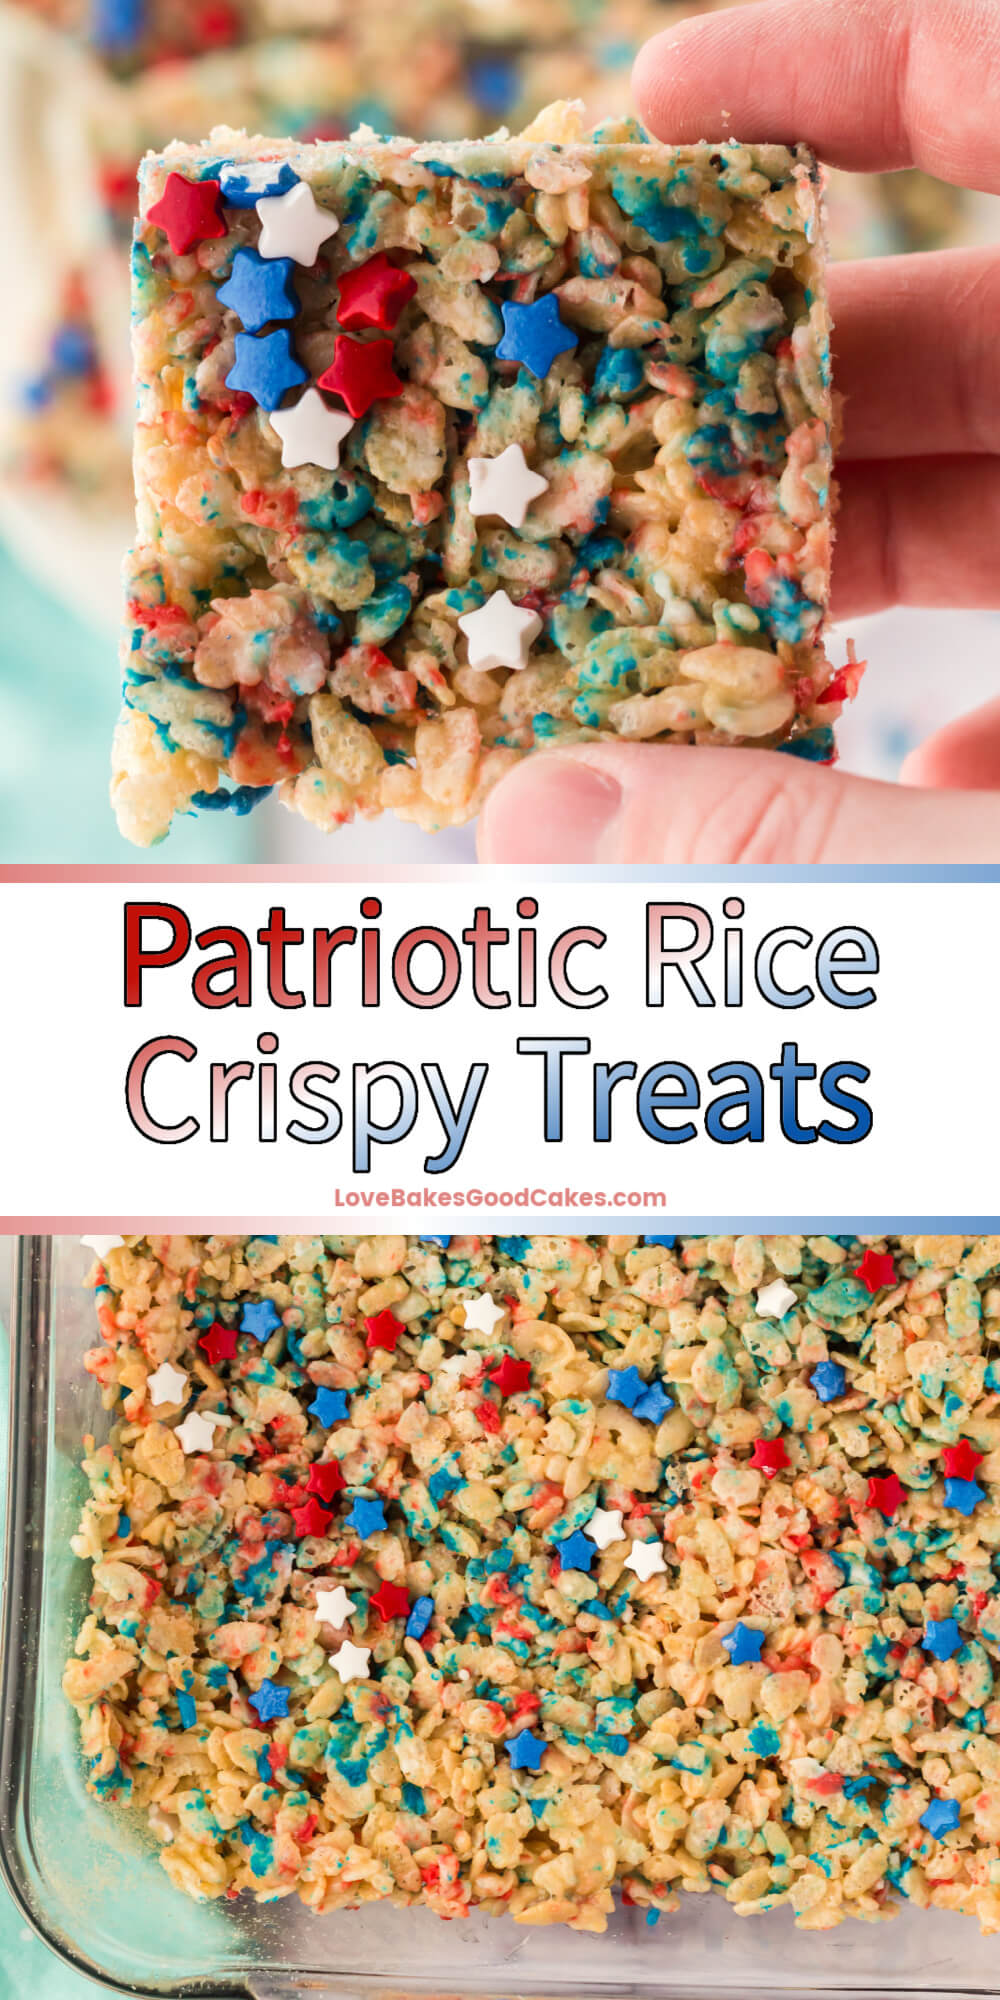 Patriotic Rice Crispy Treats - Love Bakes Good Cakes